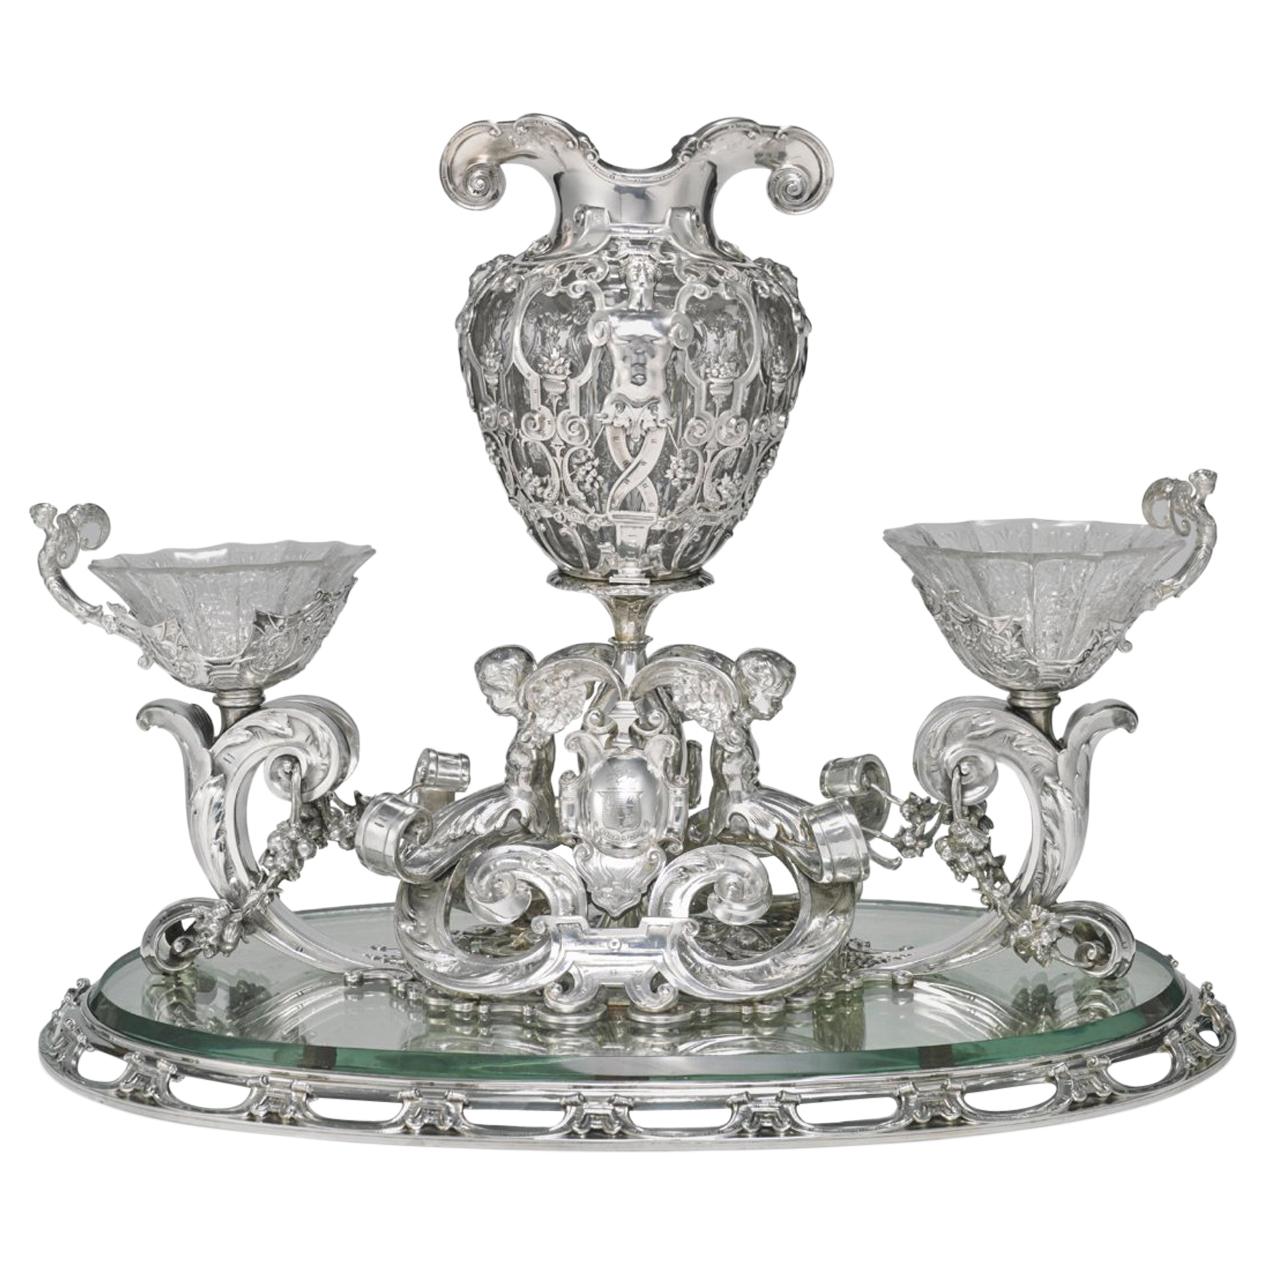 Paulding Farnham for Tiffany & Co Silver & Glass Renaissance Revival Centerpiece